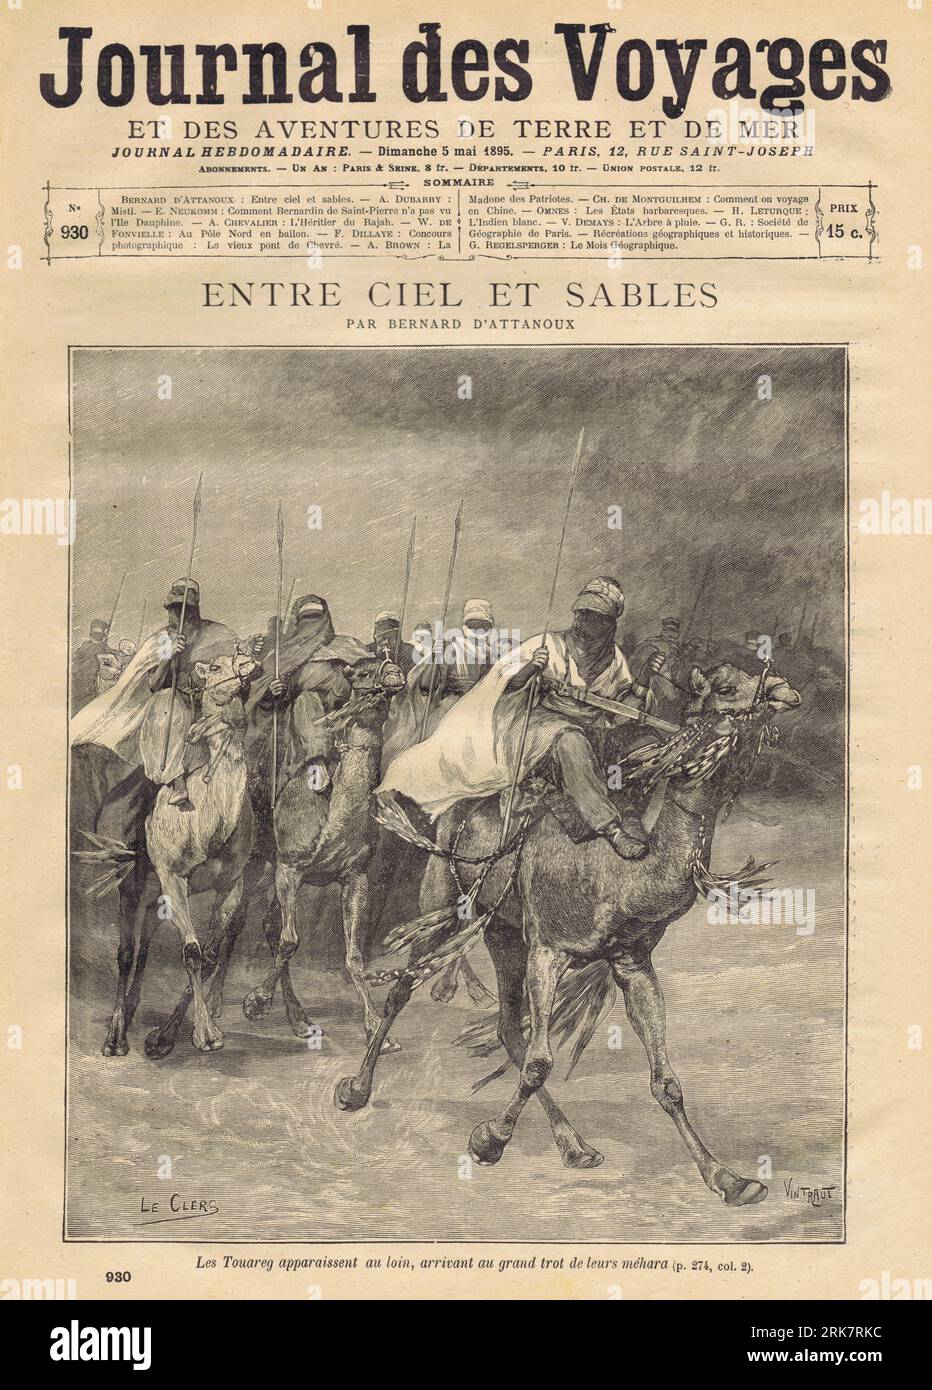 tuaregs on camels, journal des voayages, 1895,engraver Godefroy Frédéric Vintraut, illustrator Le Clerc Stock Photo